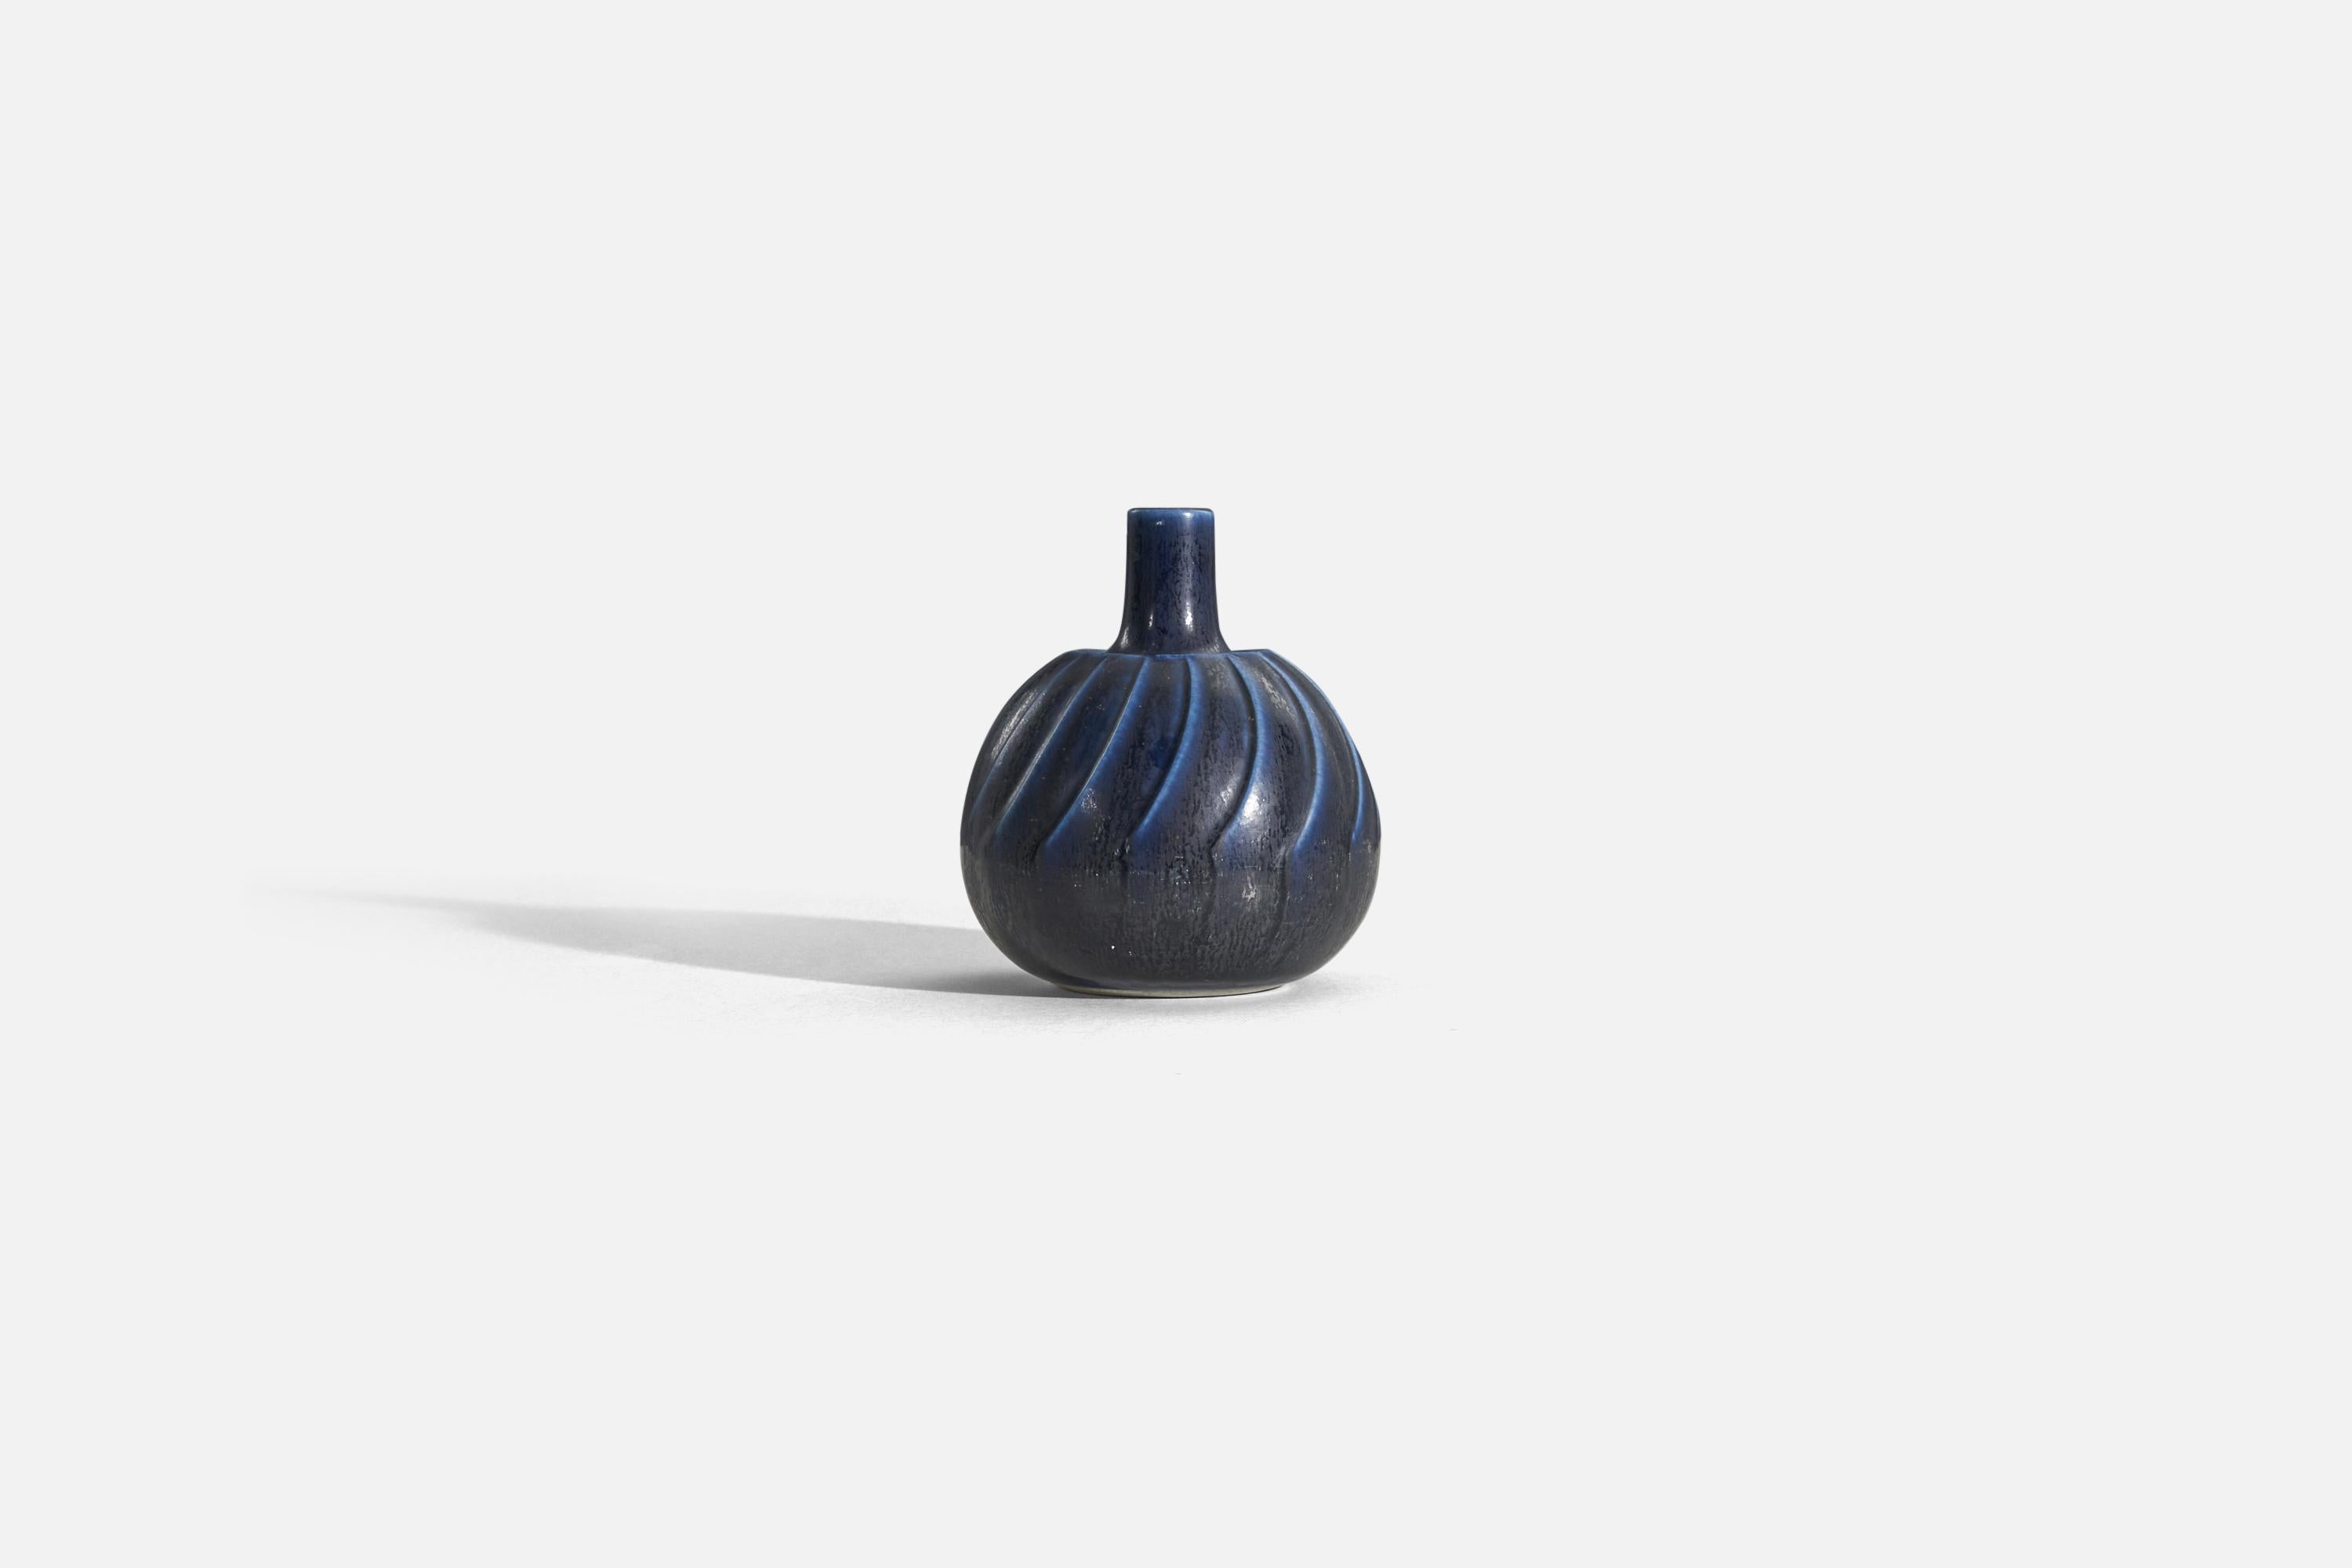 A blue-glazed stoneware vase designed by Wilhelm Kåge and produced by Gustavsberg, Sweden, c. 1960s.

